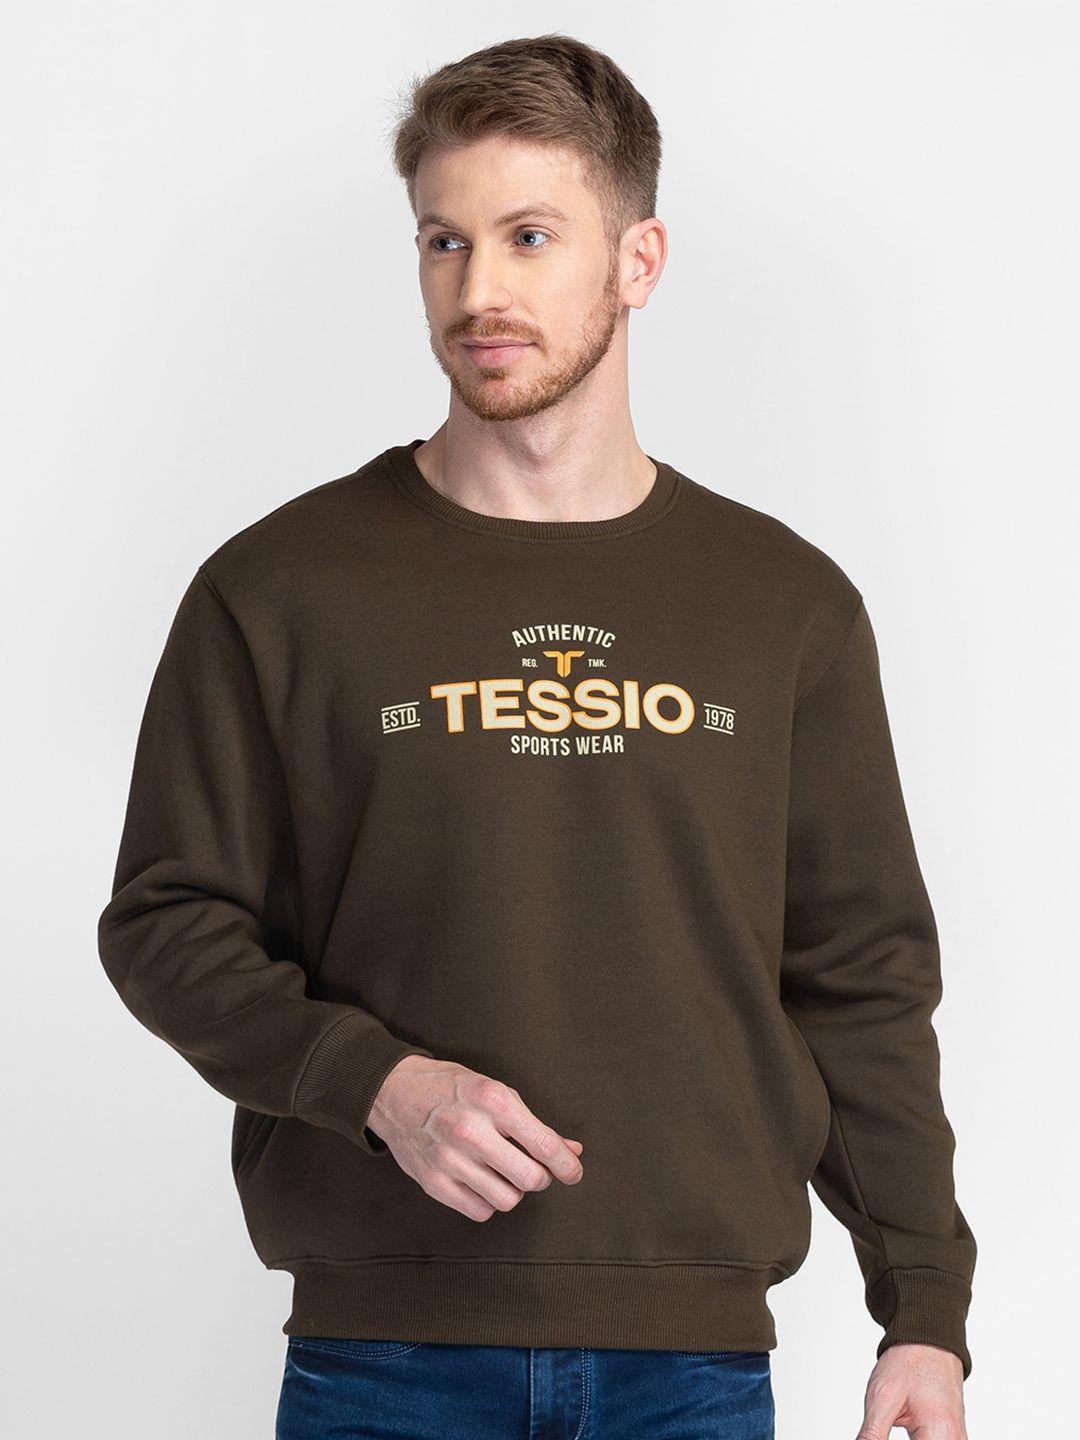 tessio brand logo printed pullover cotton sweatshirt